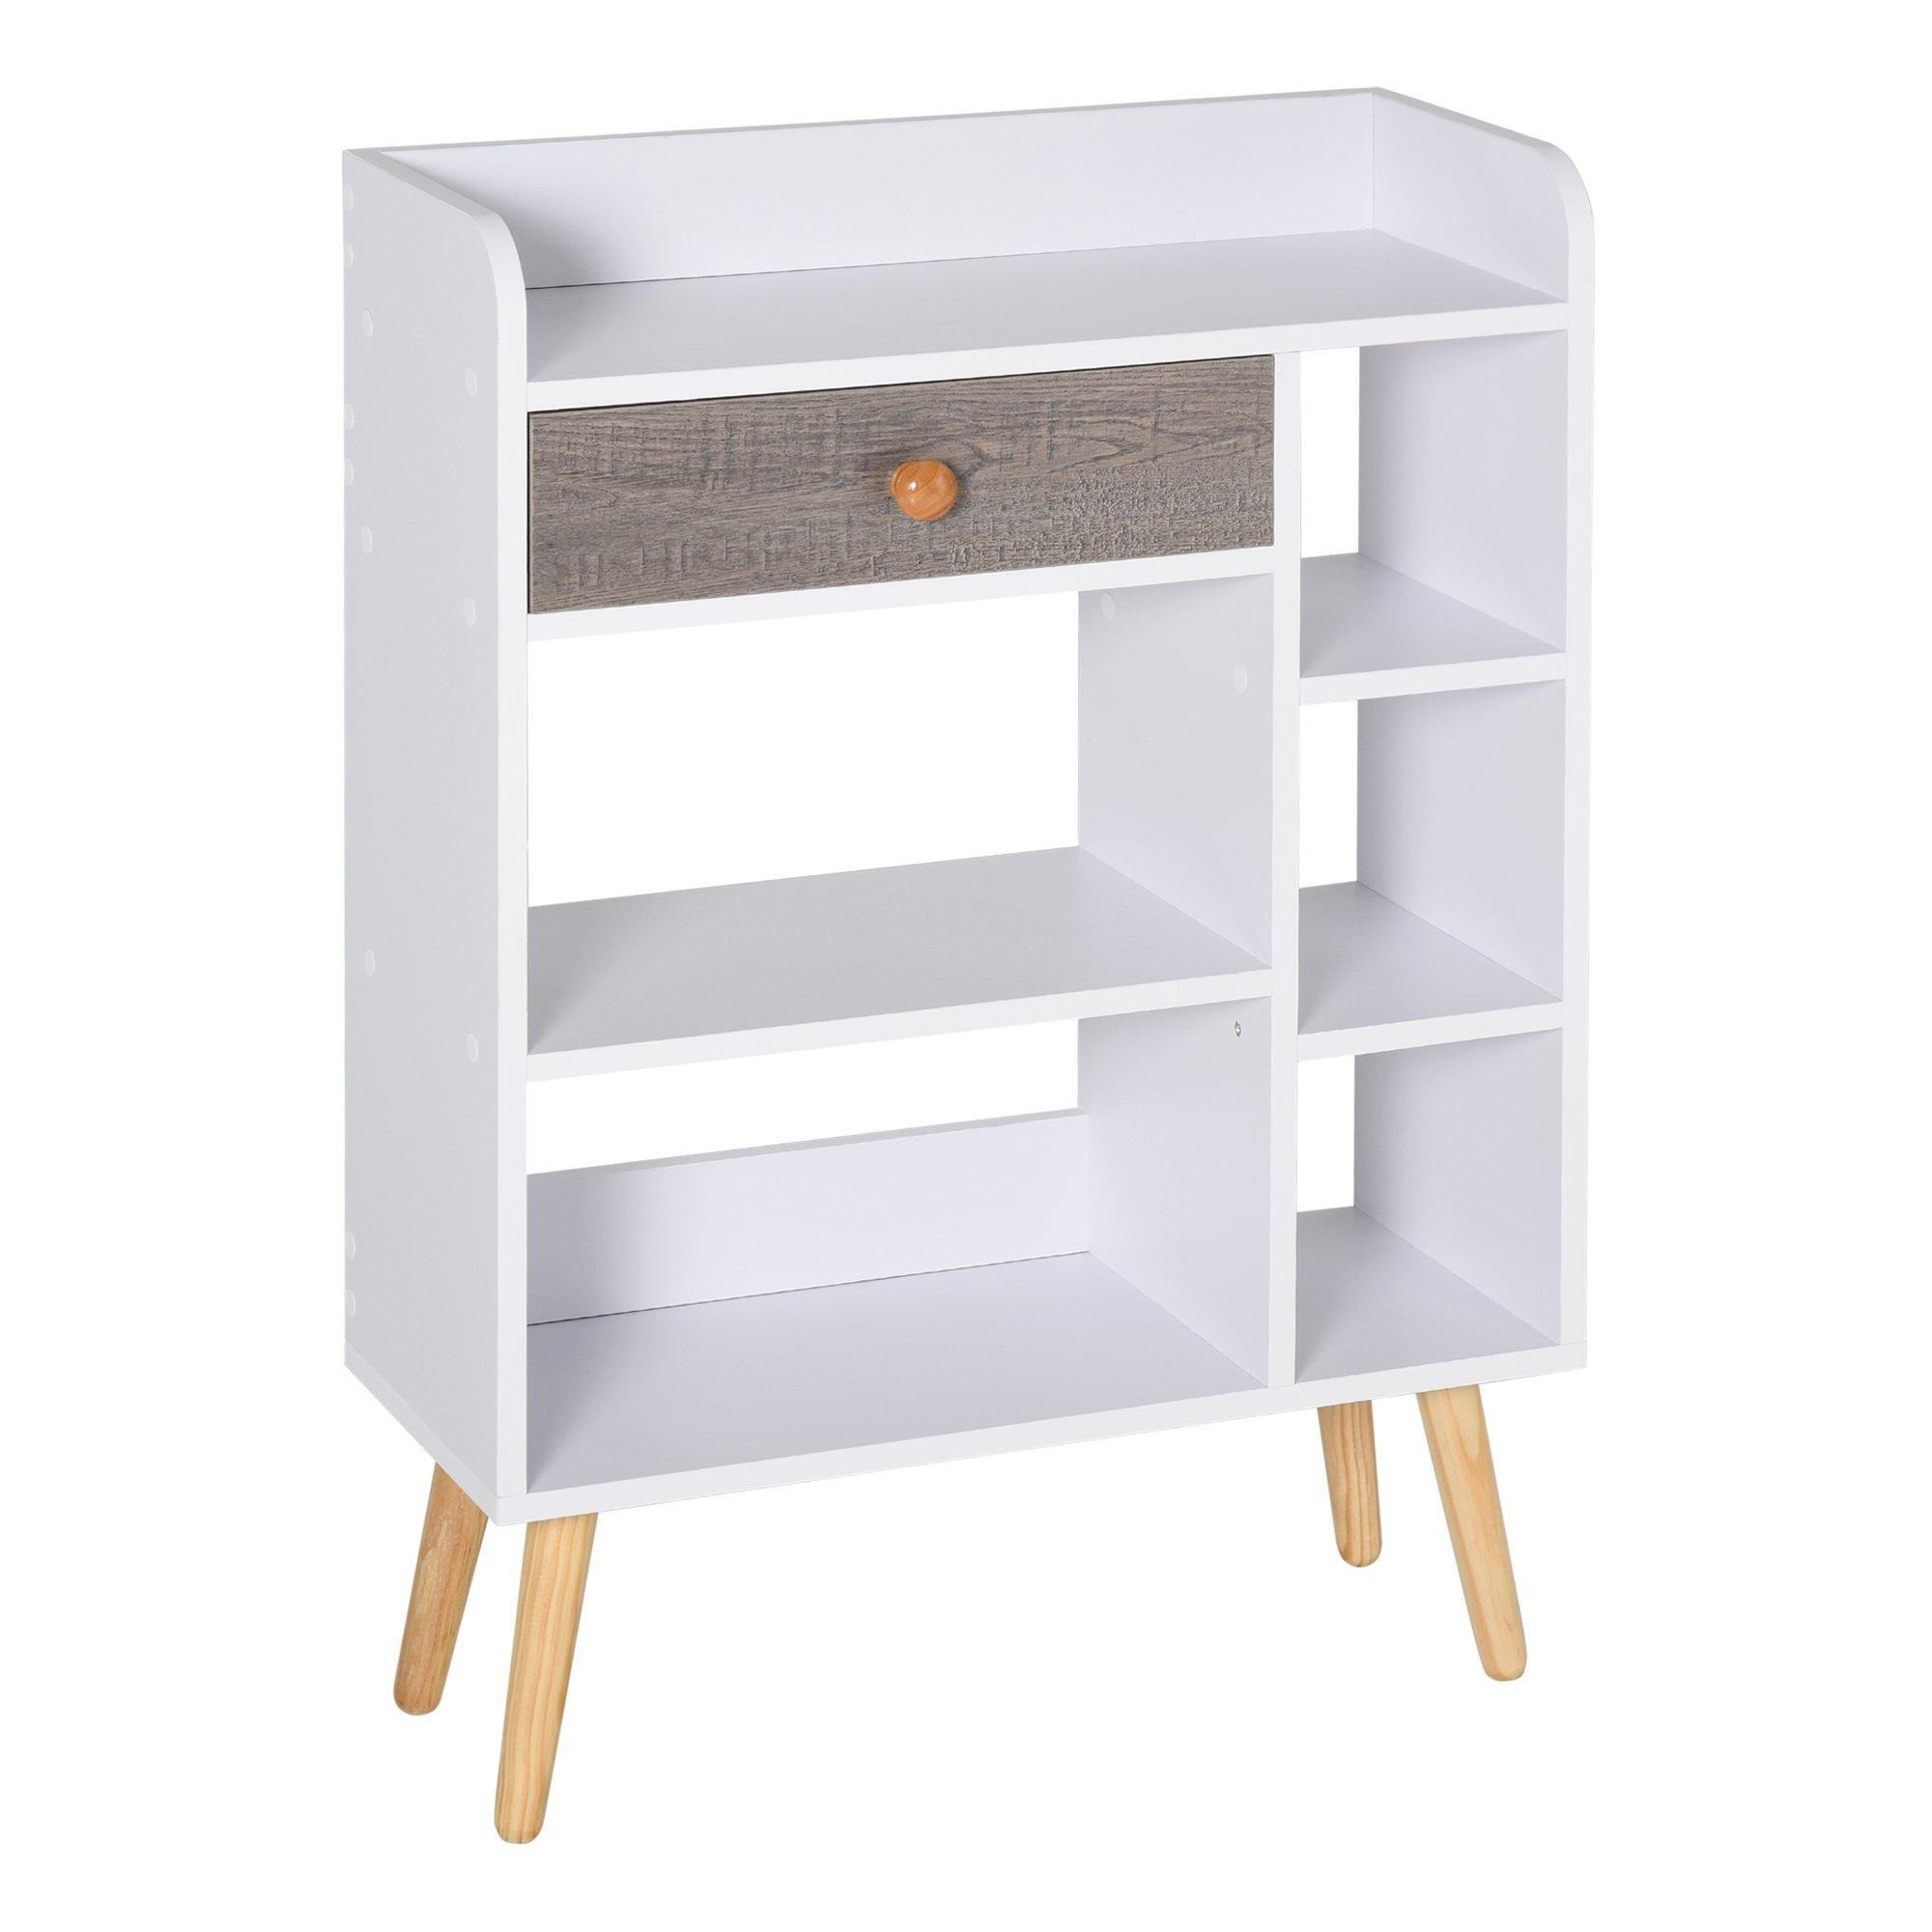 Multi-Shelf Bookcase Freestanding Storage with Drawer Shelves Wood Legs - image 1